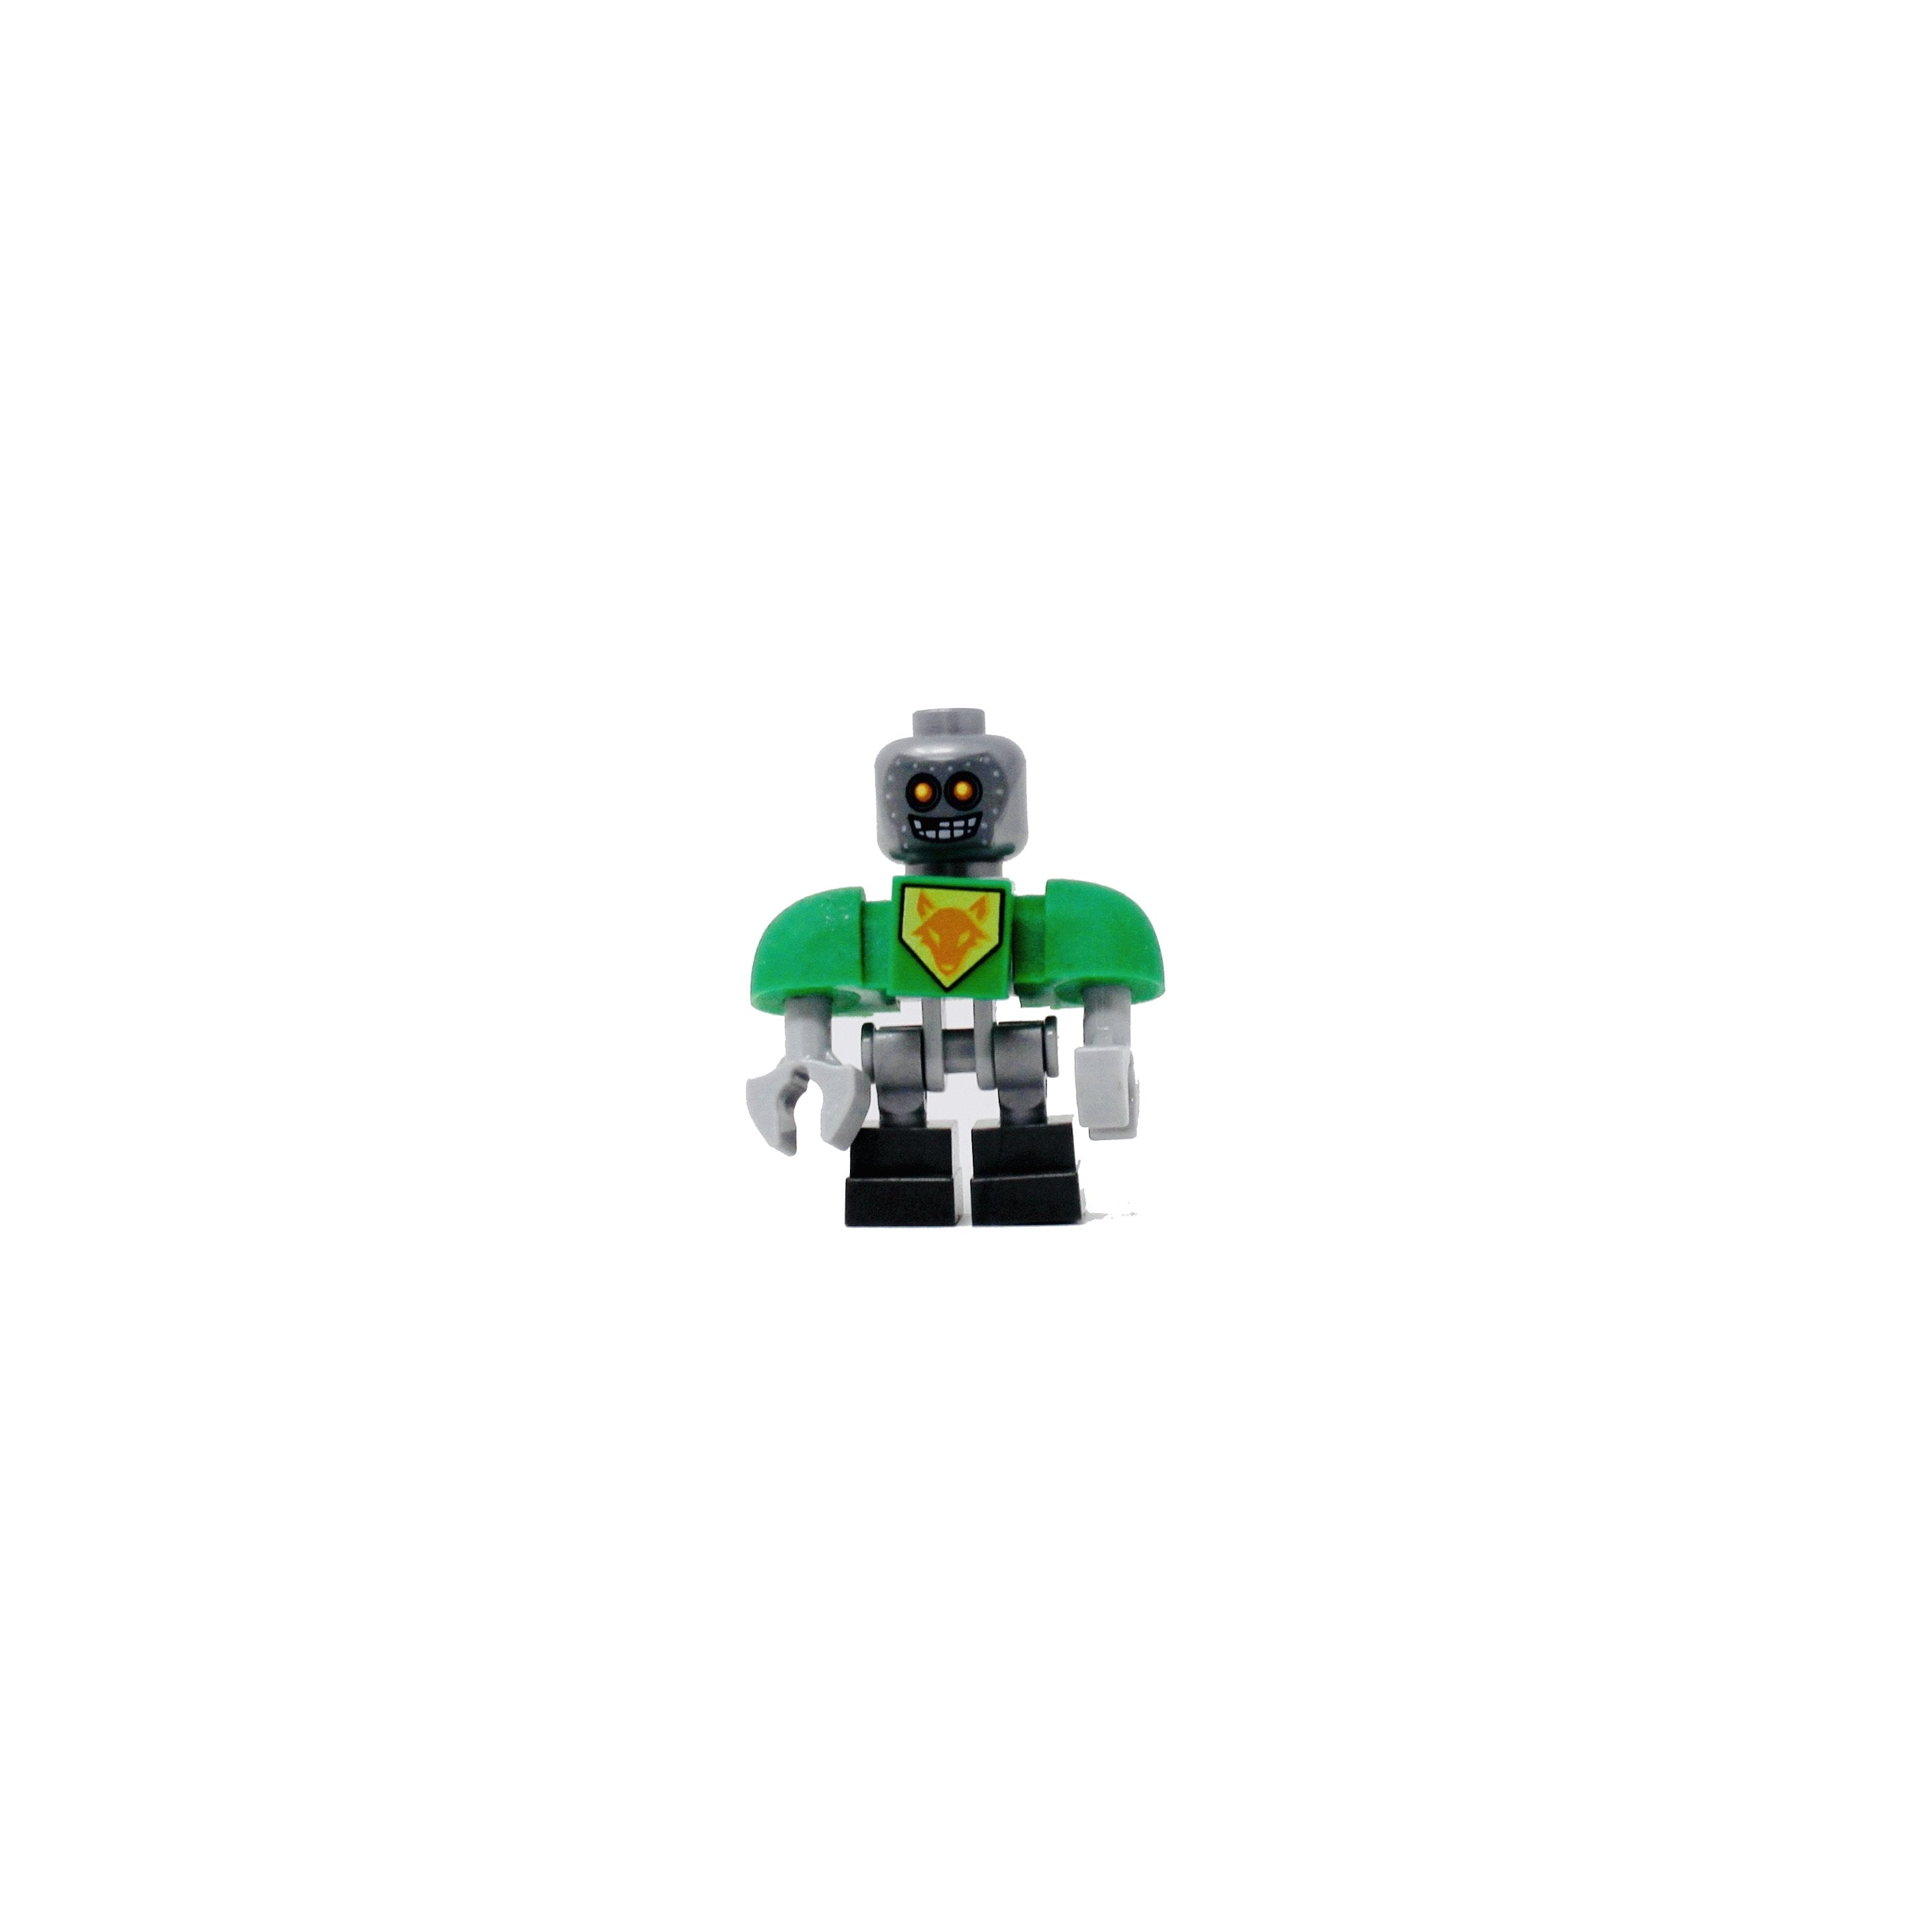 Nexo Knights Bot (green, smiling)